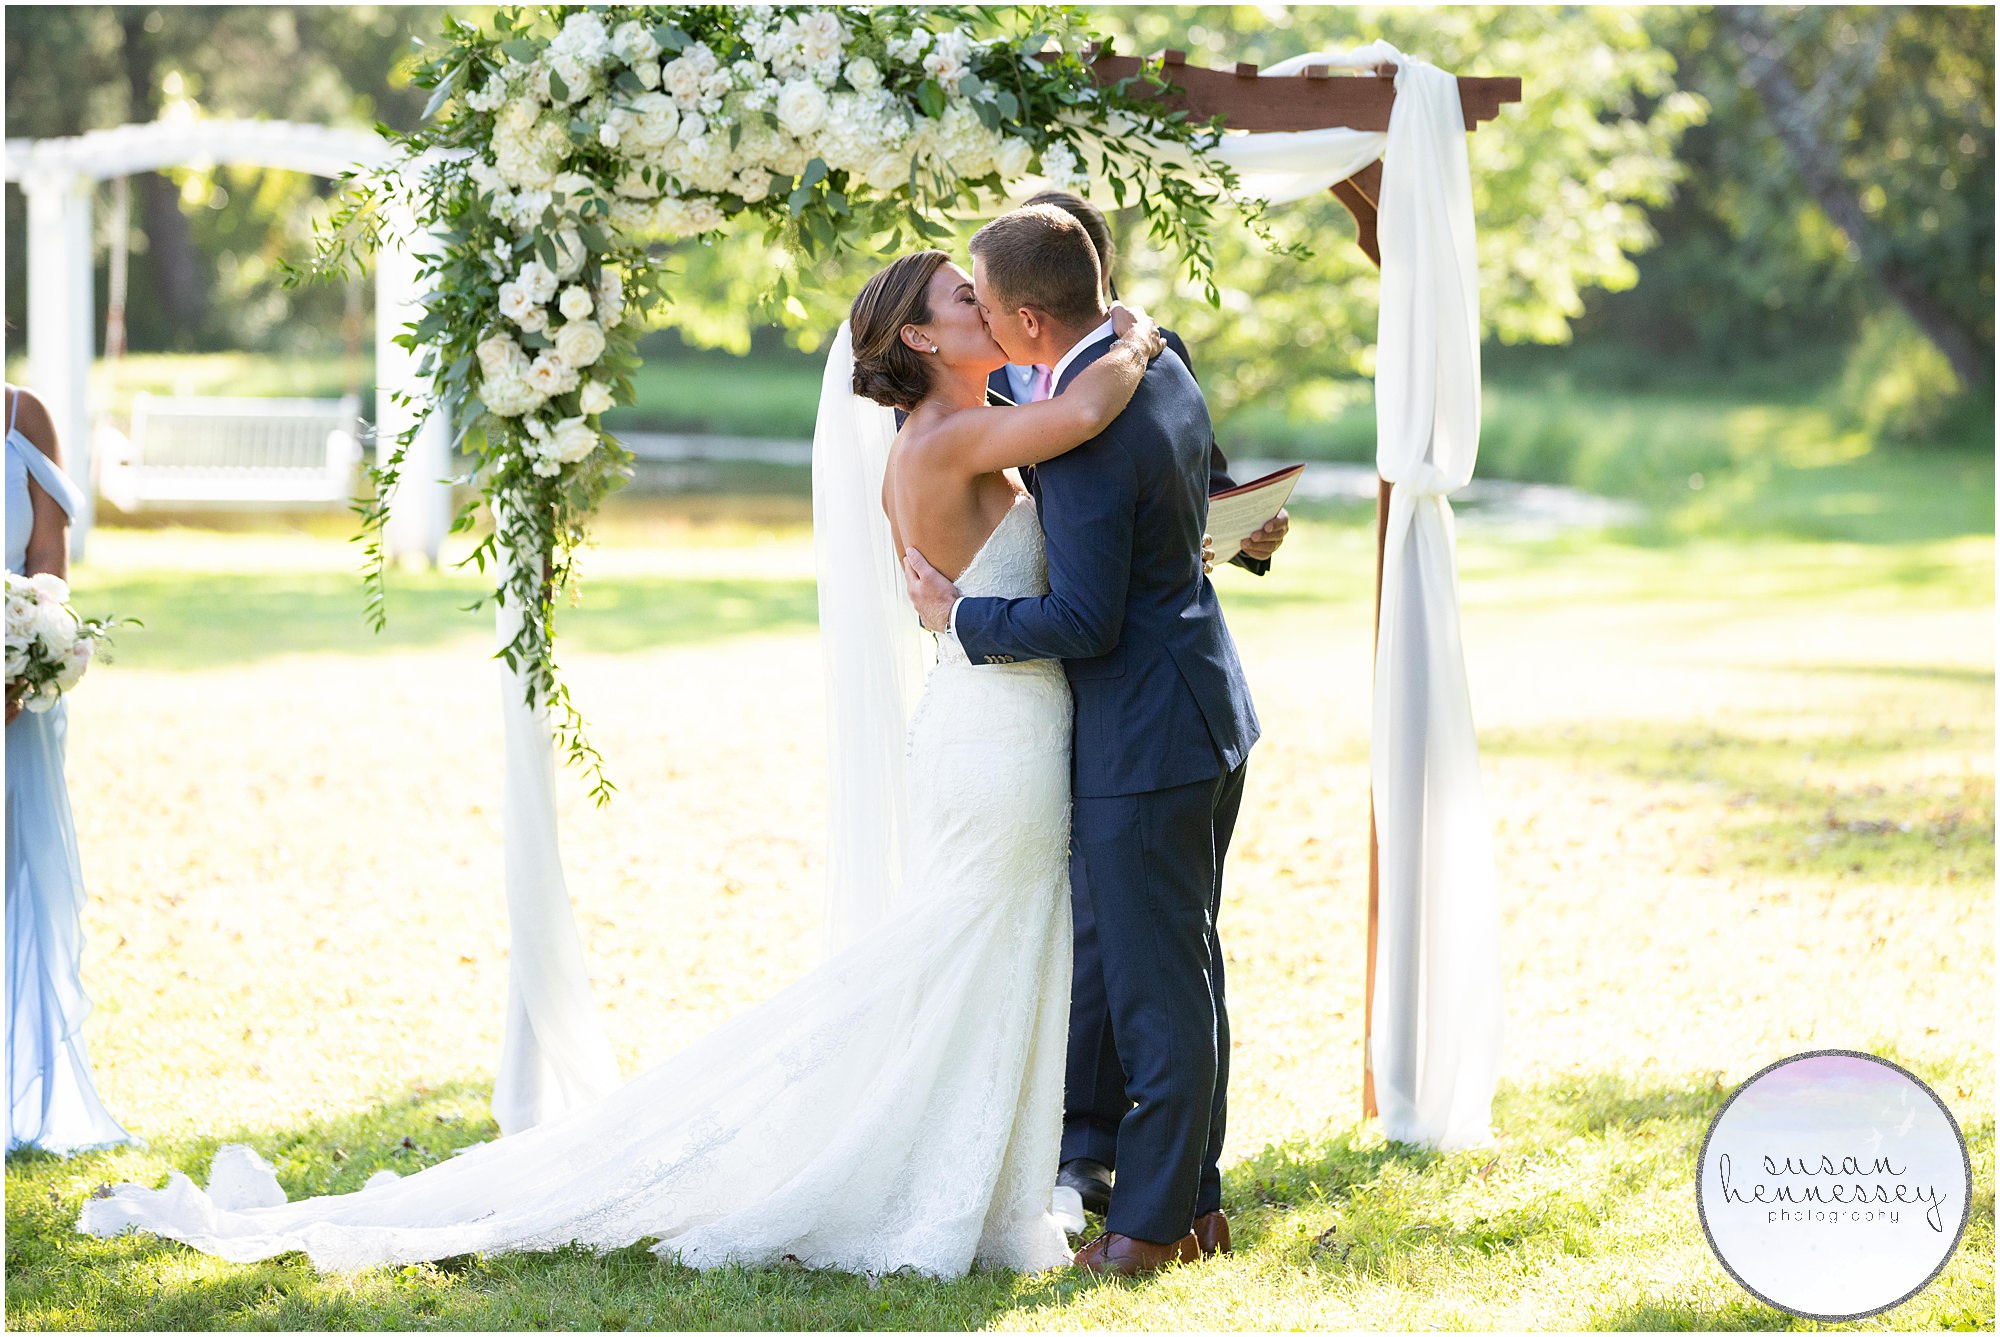 First kiss at Outdoor ceremony at Inn at Barley Sheaf Farm outdoor wedding